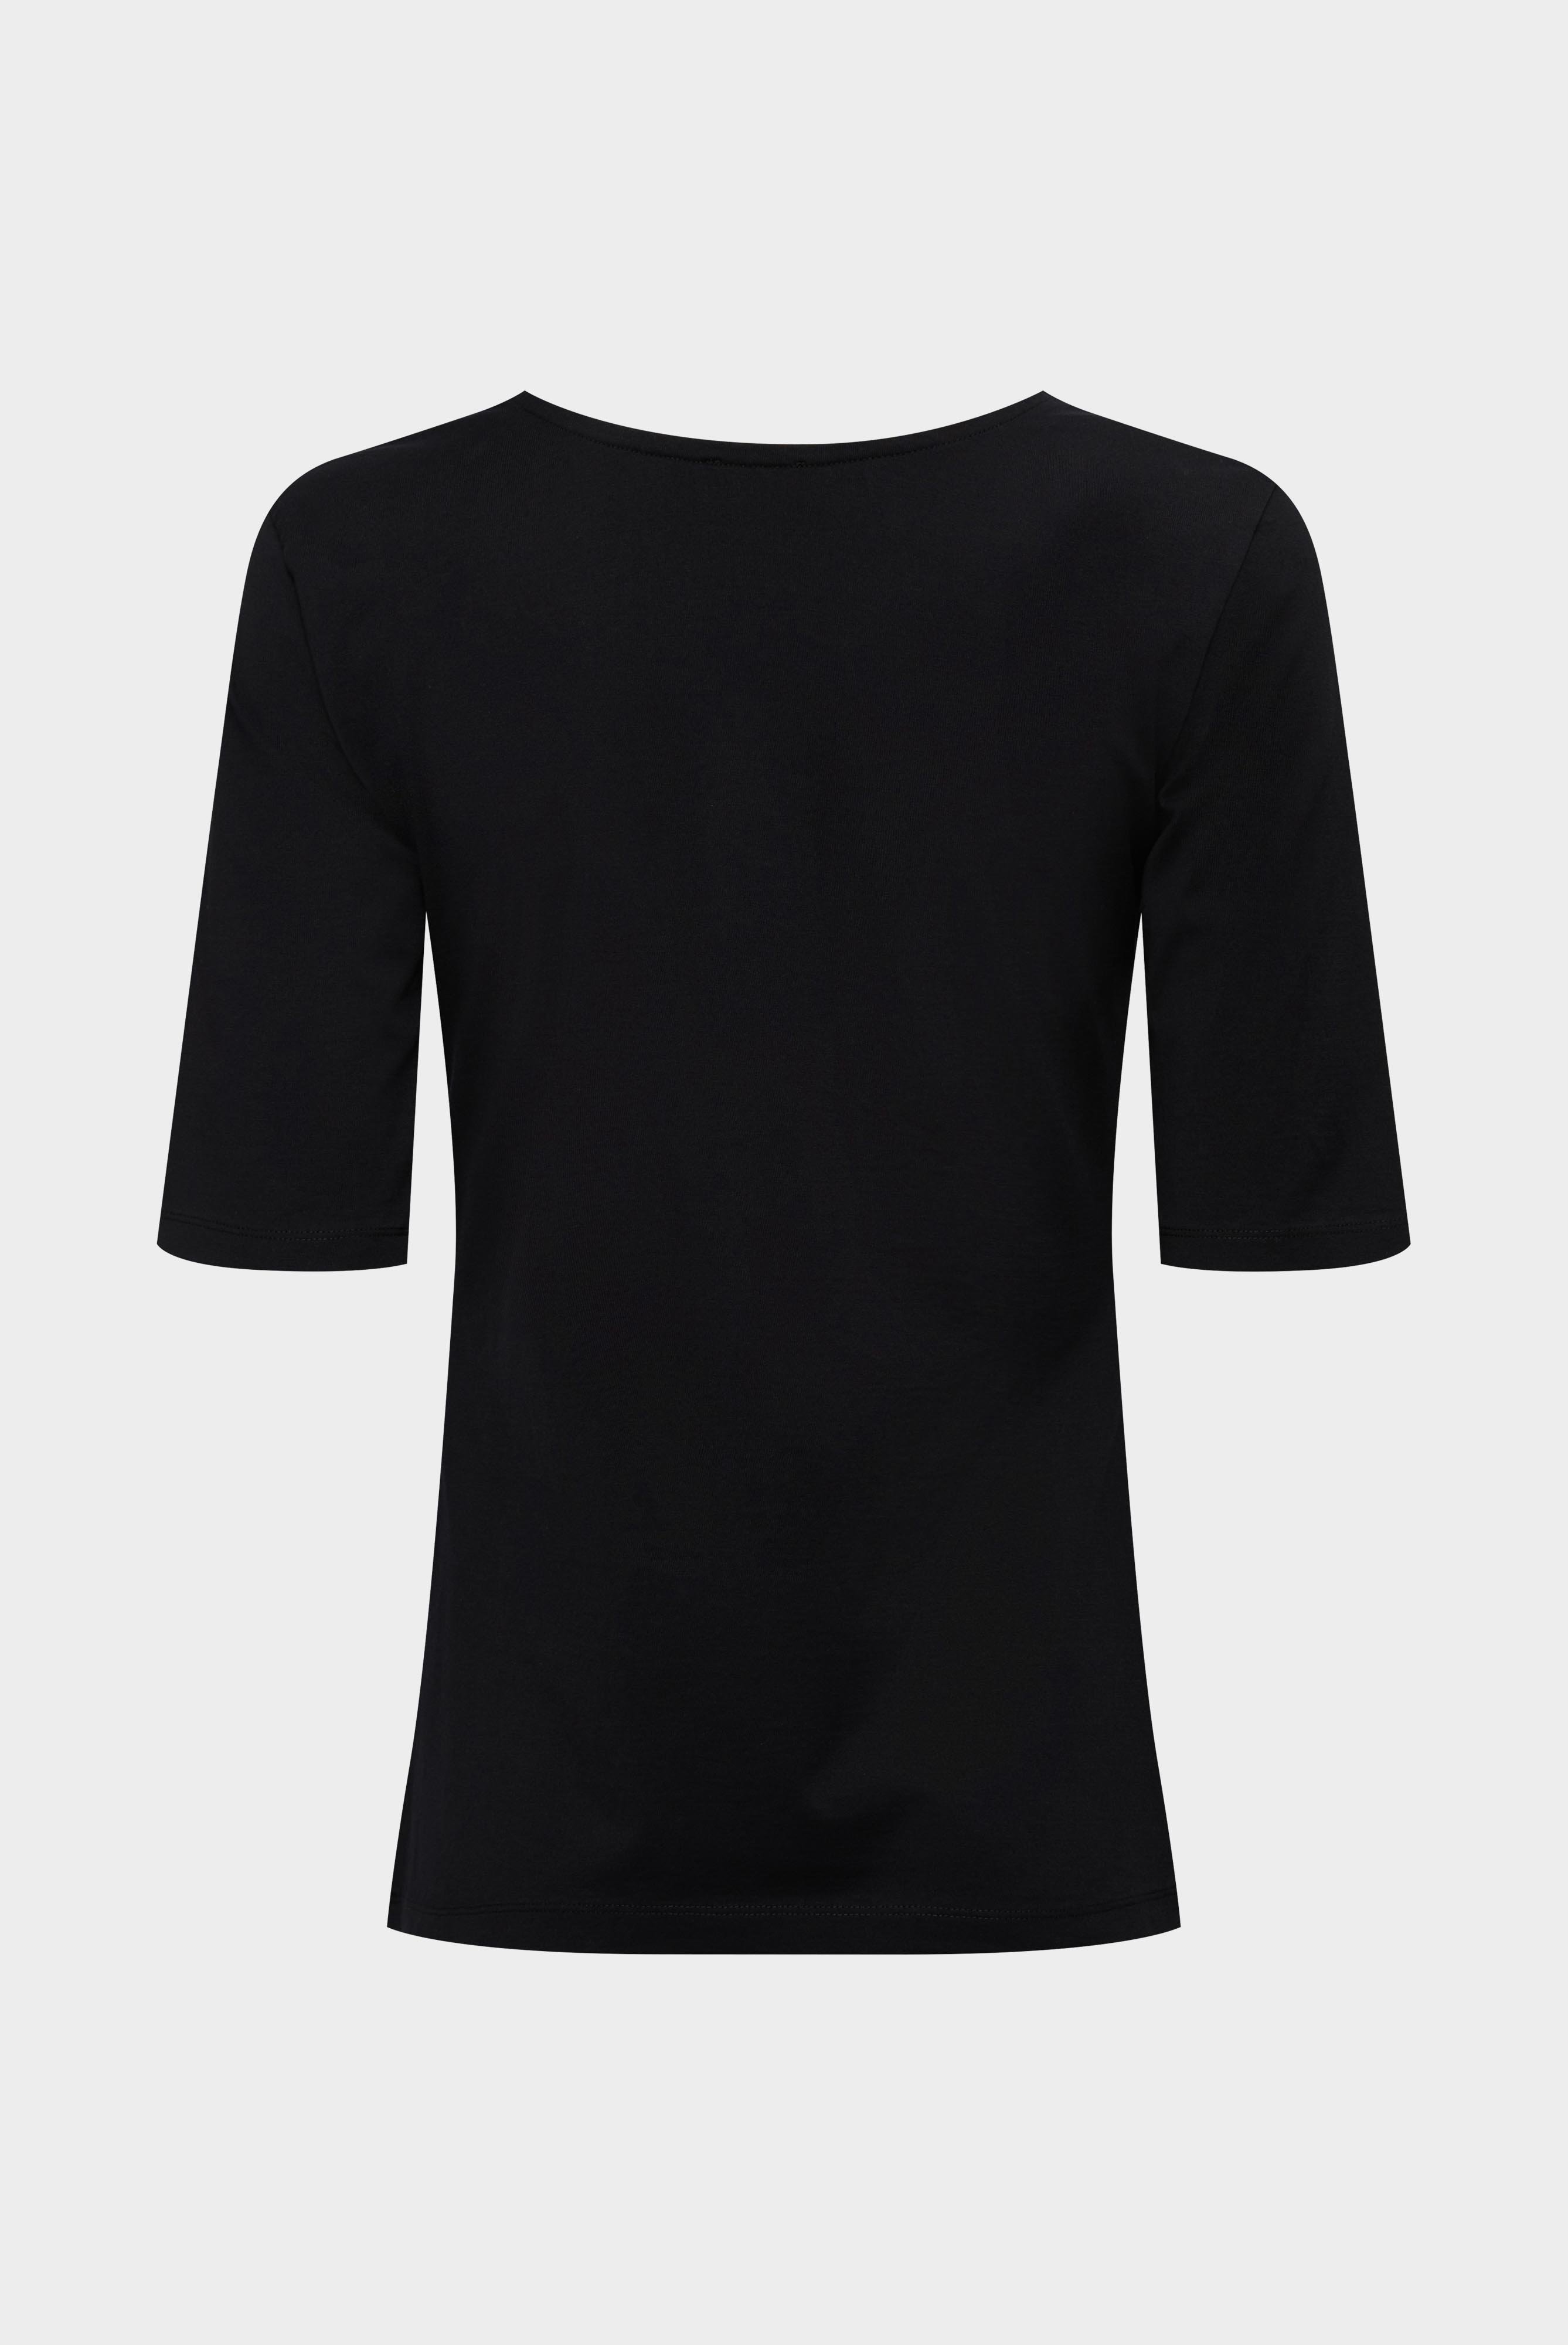 Tops & T-Shirts+Urban Jersey Wide Neck T-Shirt+05.2911..Z20044.099.S